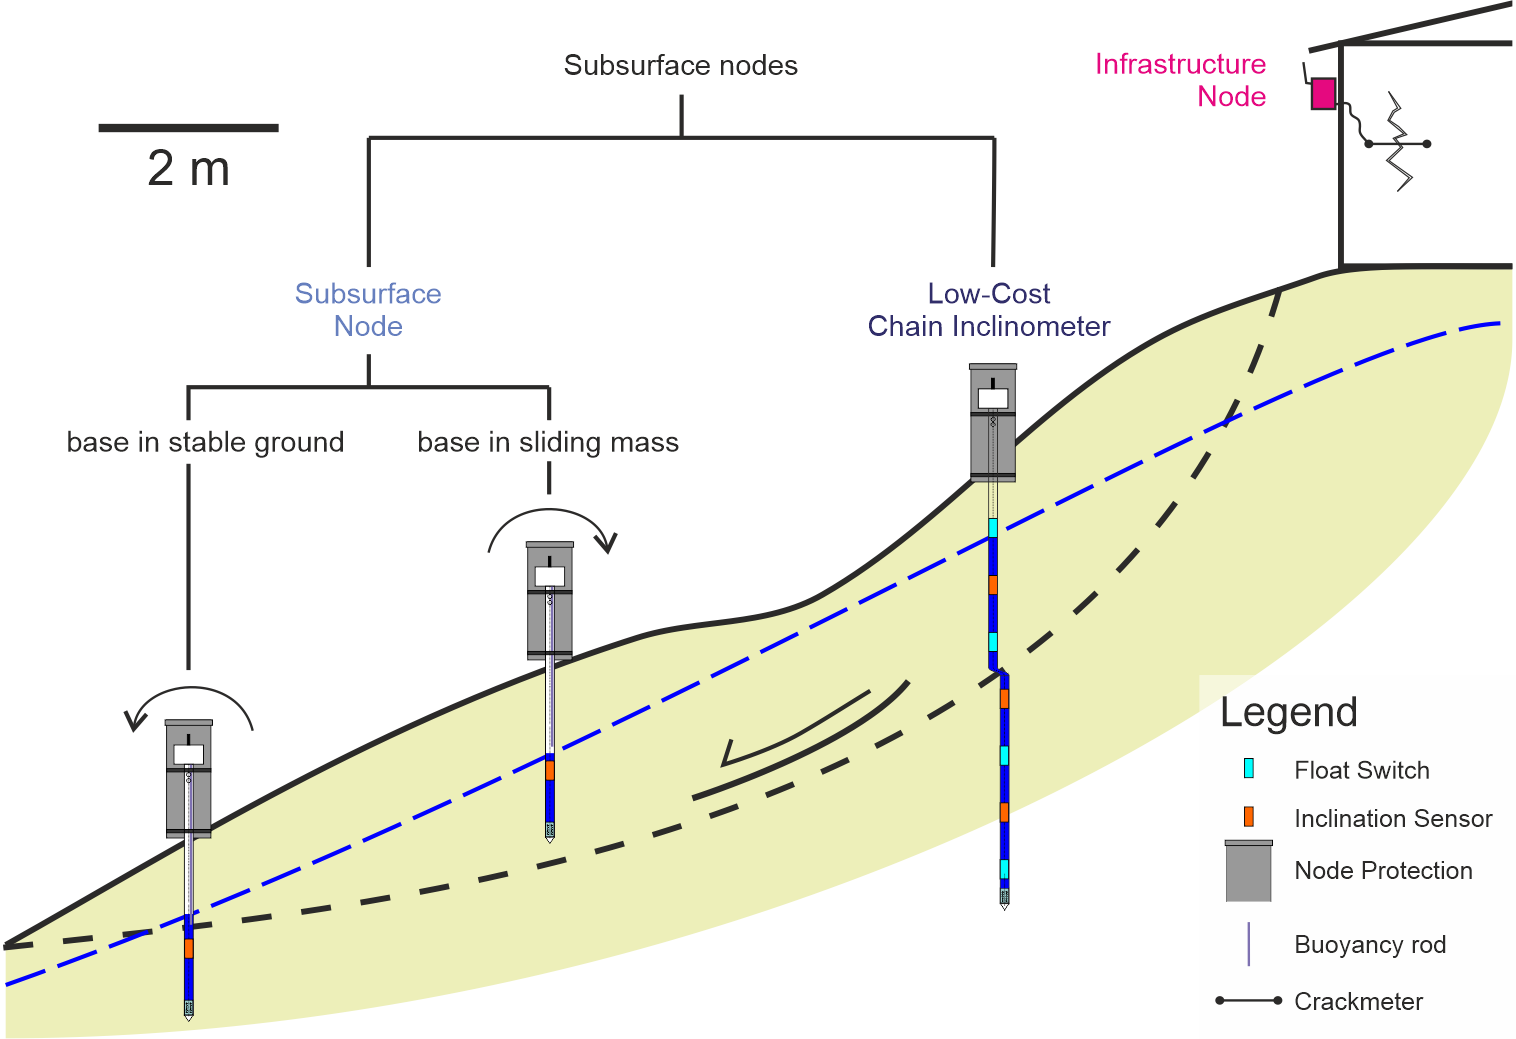 General measurement concept for Inform@Risk Measurement Nodes. This document deals with the Subsurface Node (left).